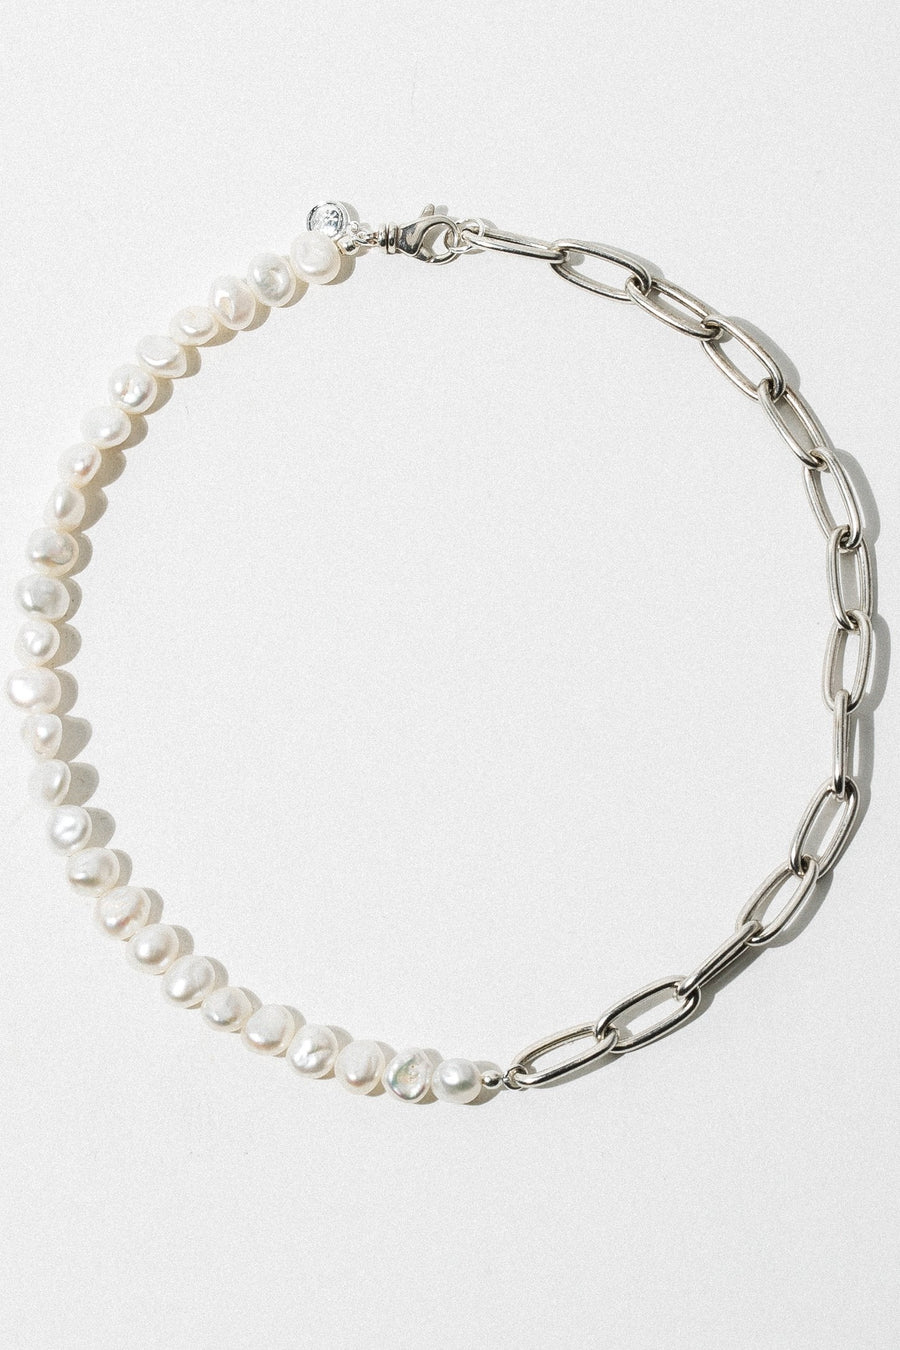 Goddess Jewelry Silver / 16 Inches Monaco Pearl/Chain Necklace